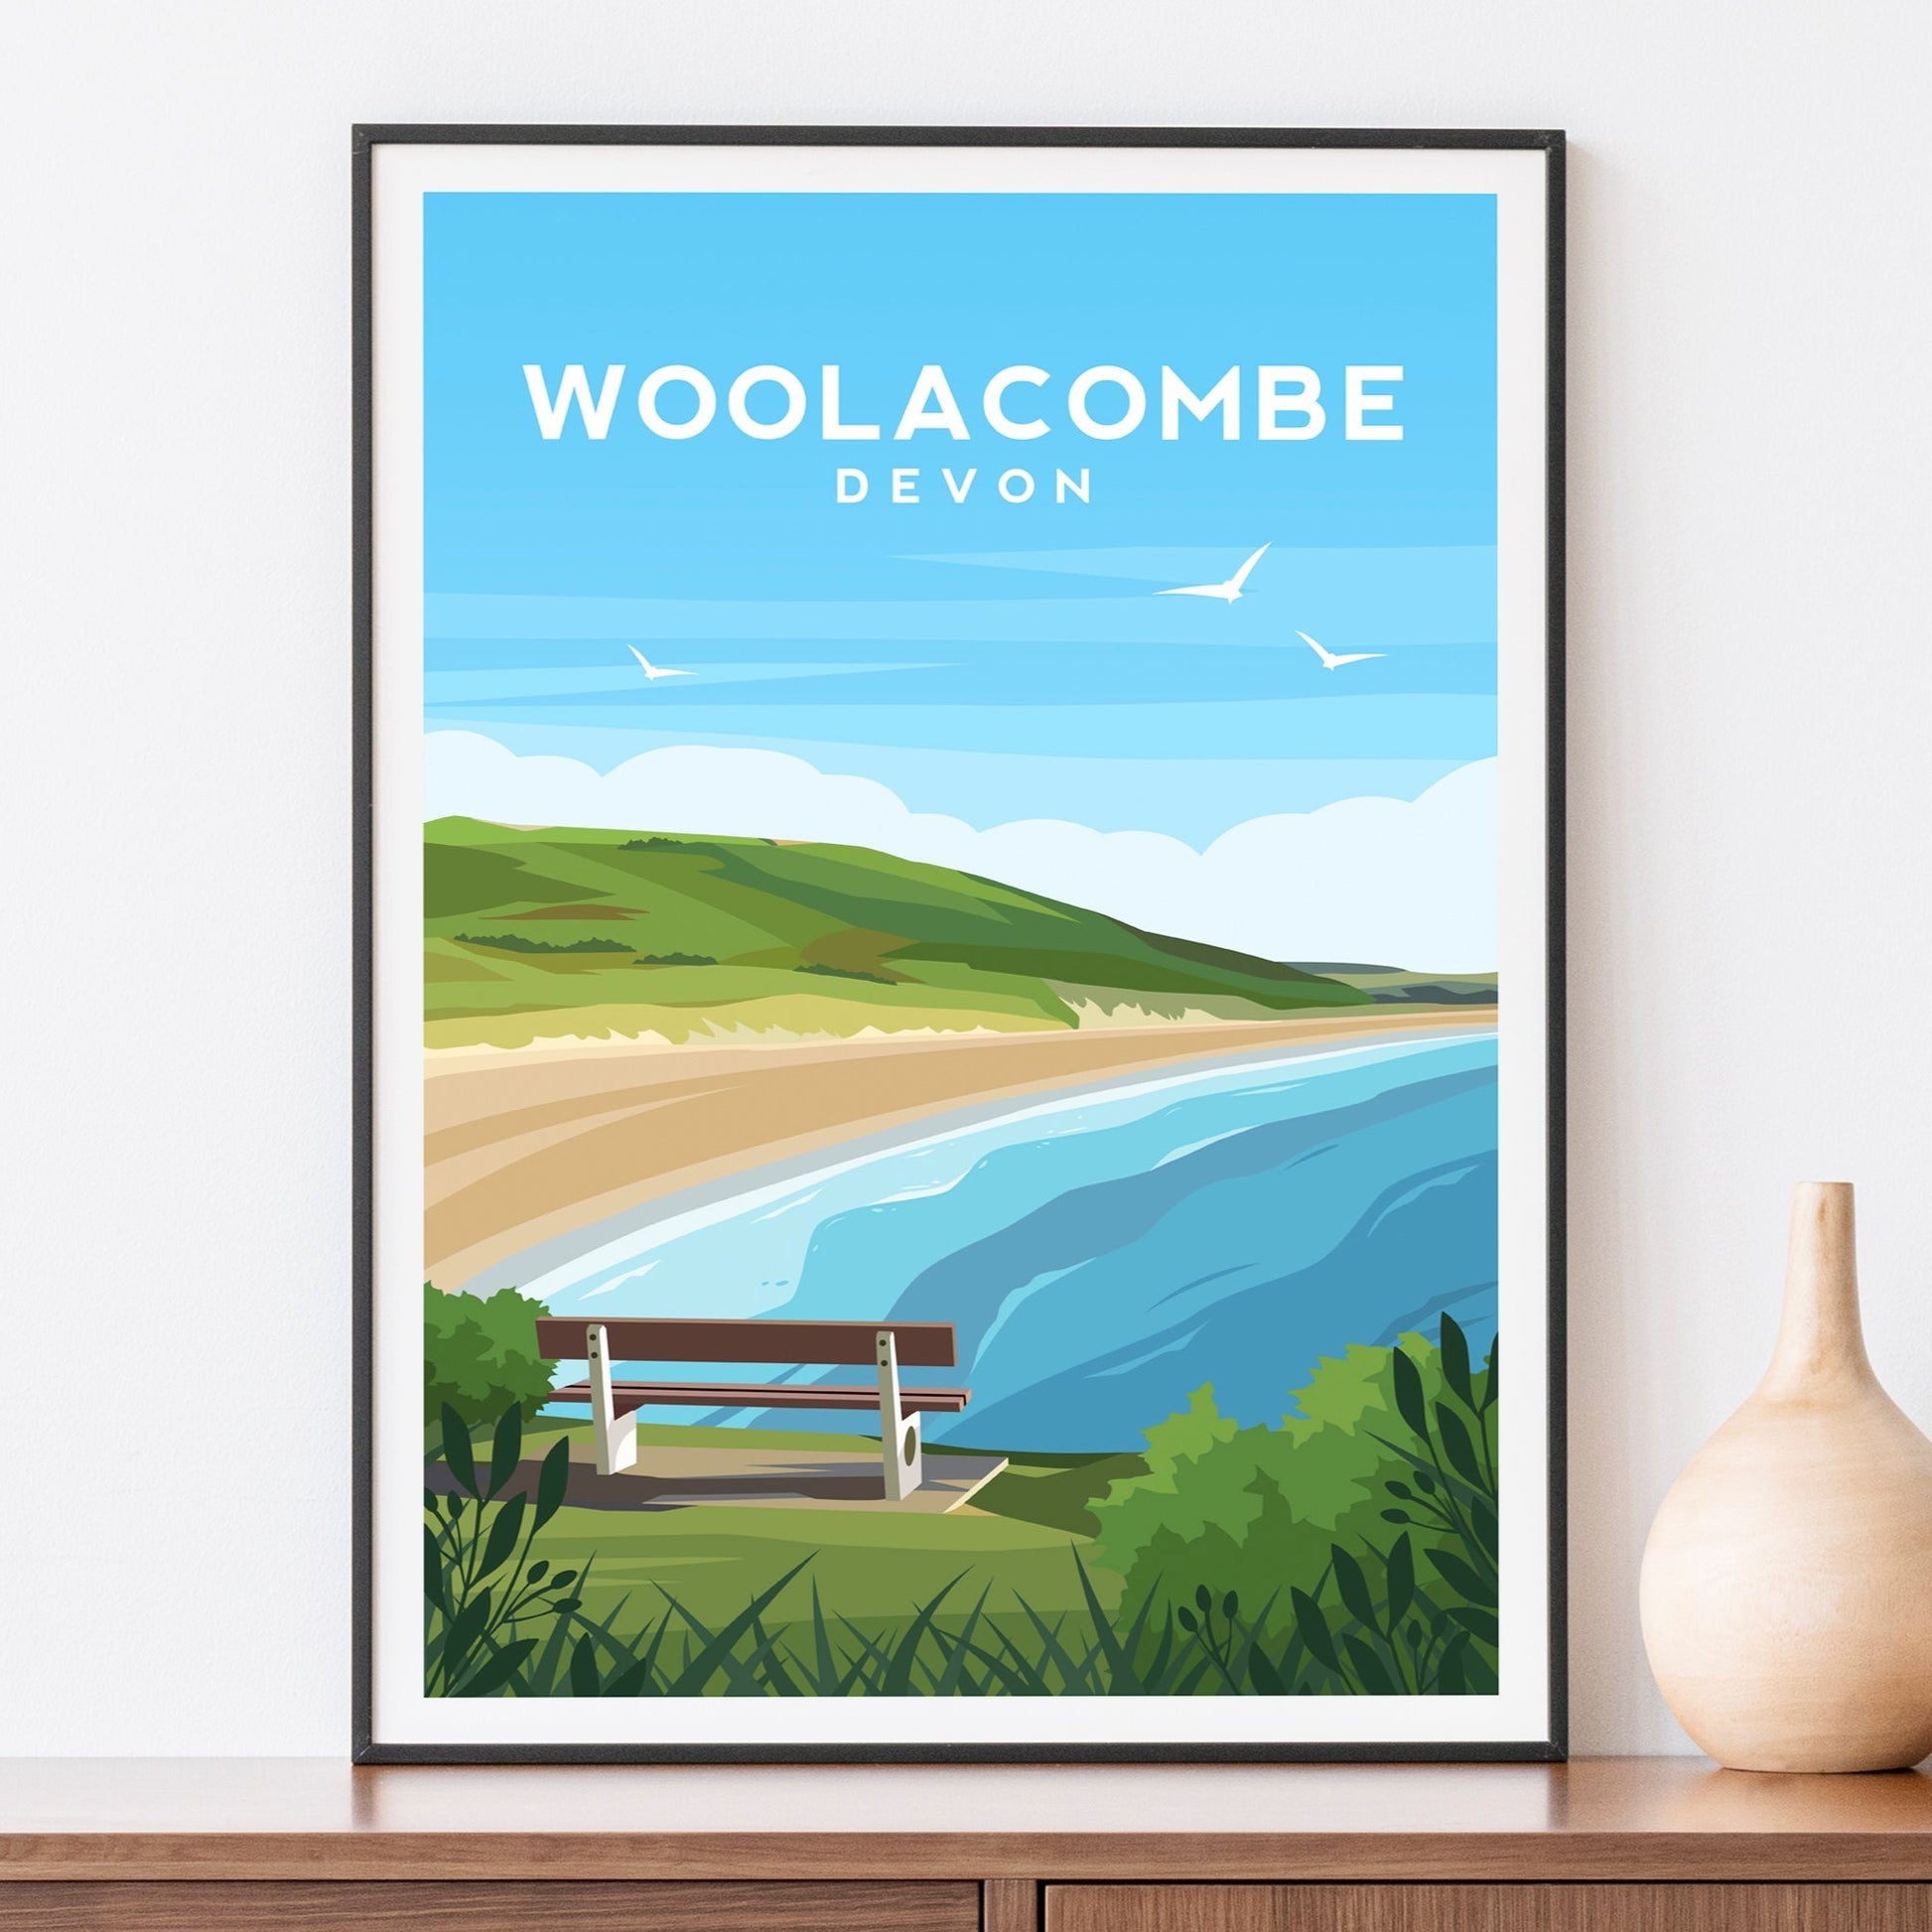 Woolacombe Beach Print, Devon England Travel Wall Art - Typelab